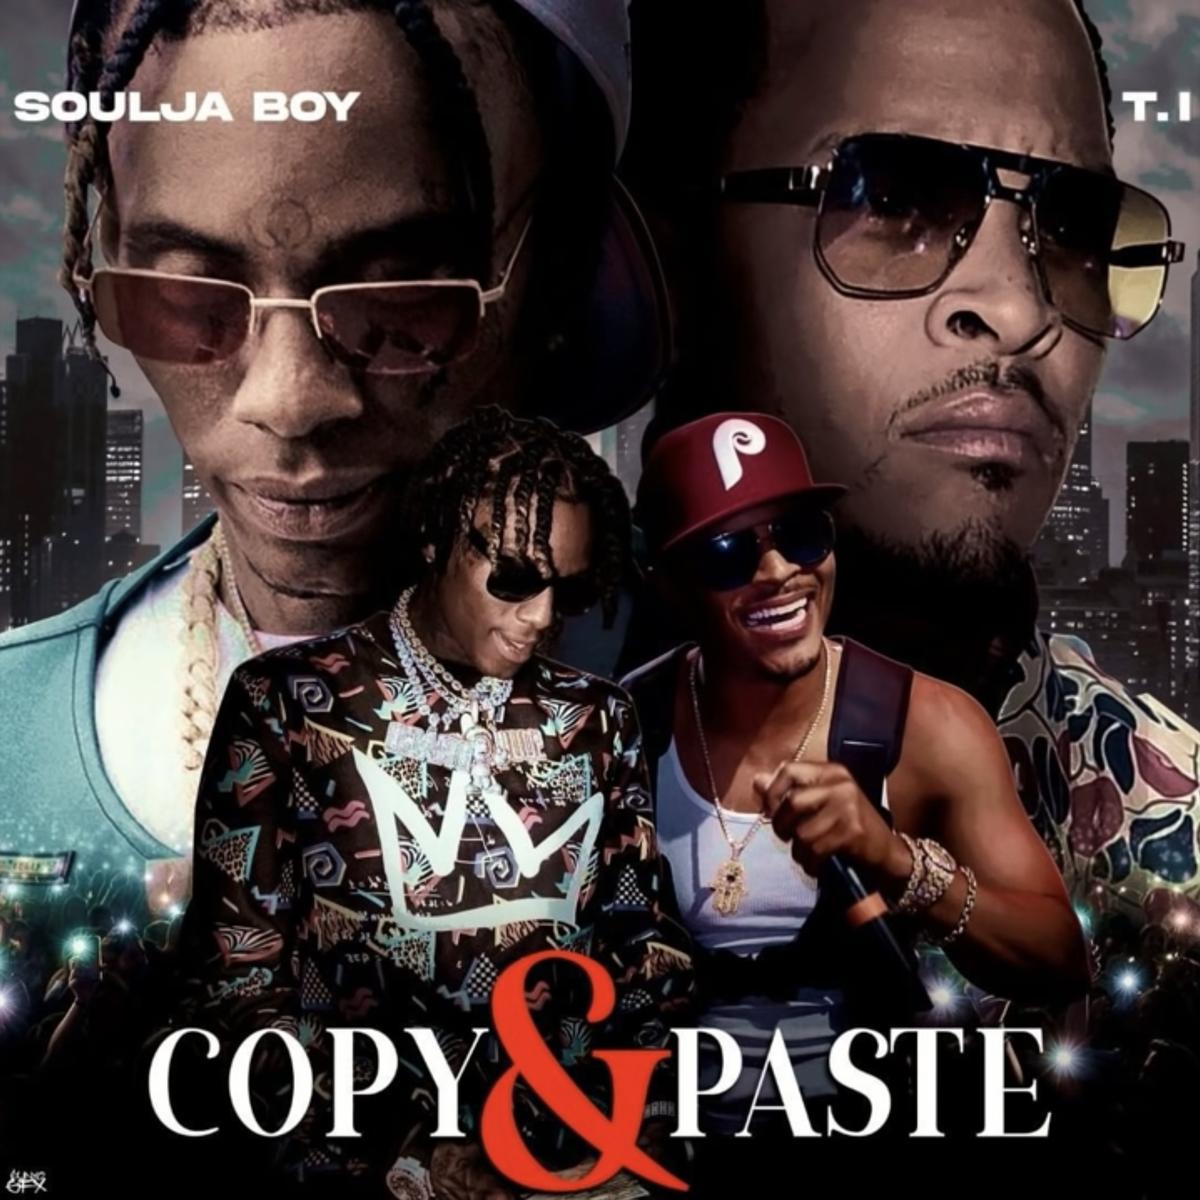 Soulja Boy Recruits T.I. For “Copy & Paste”